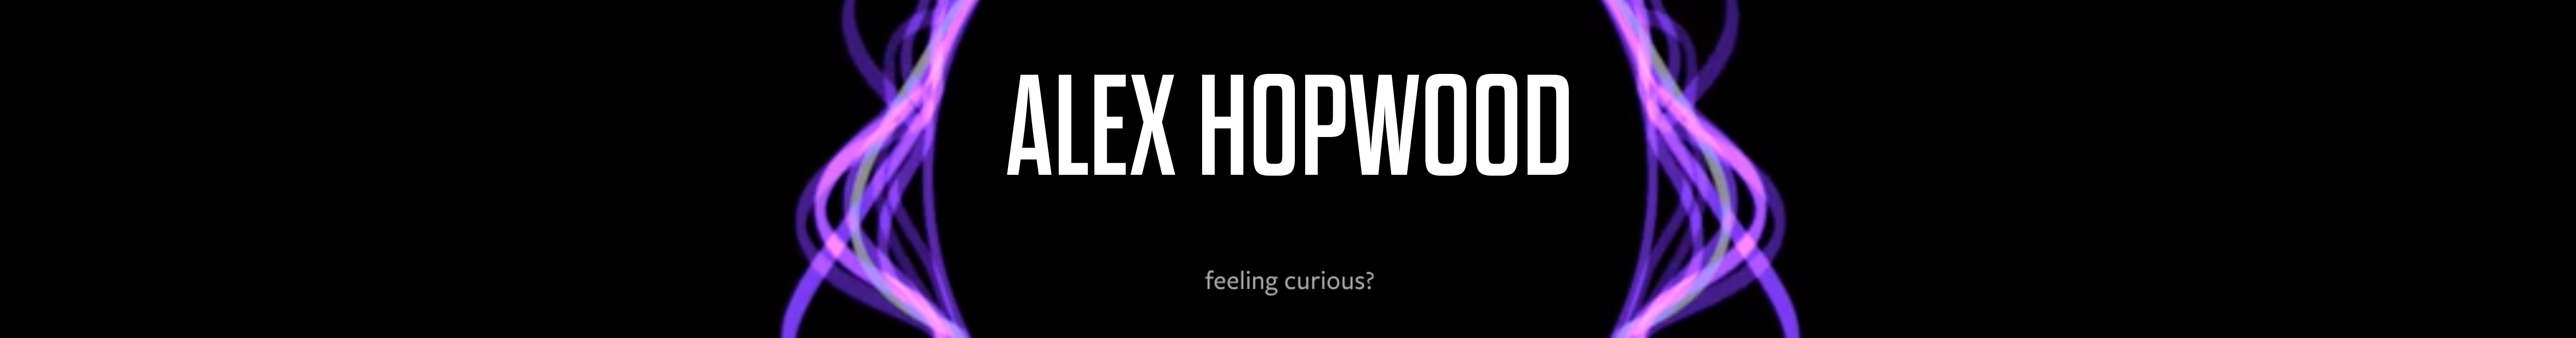 Alex Hopwood's profile banner